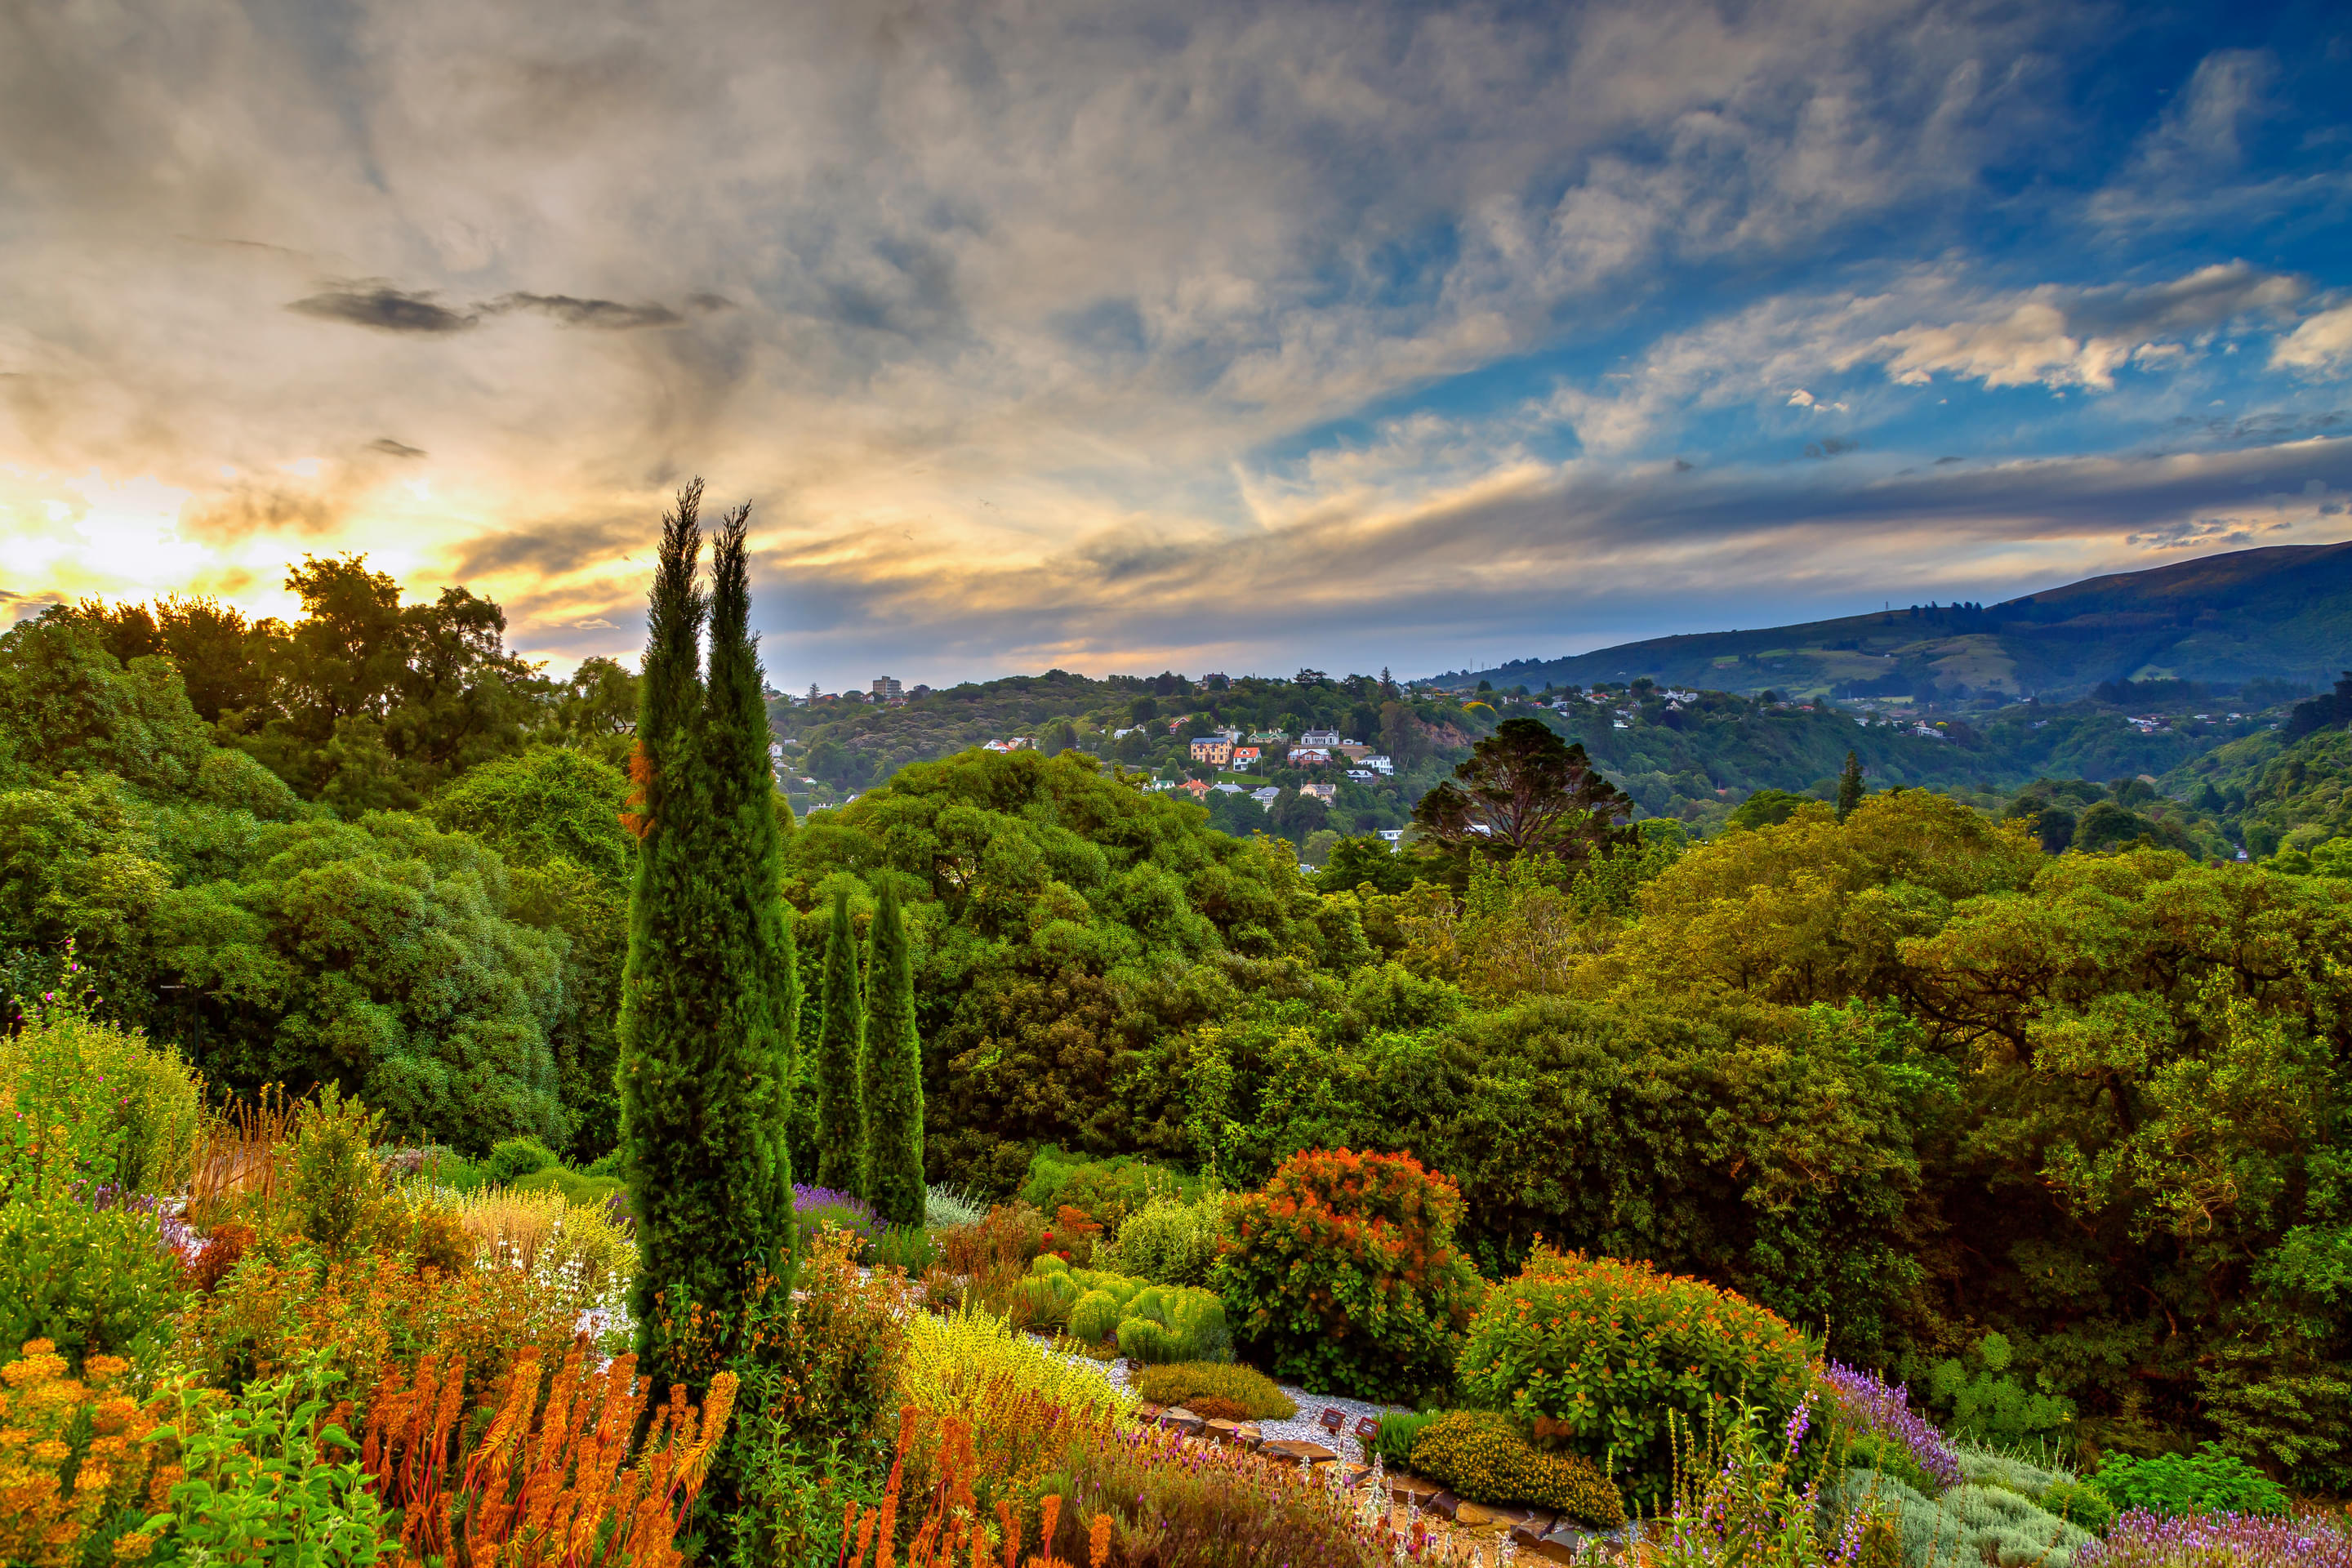 Dunedin Botanic Garden Overview